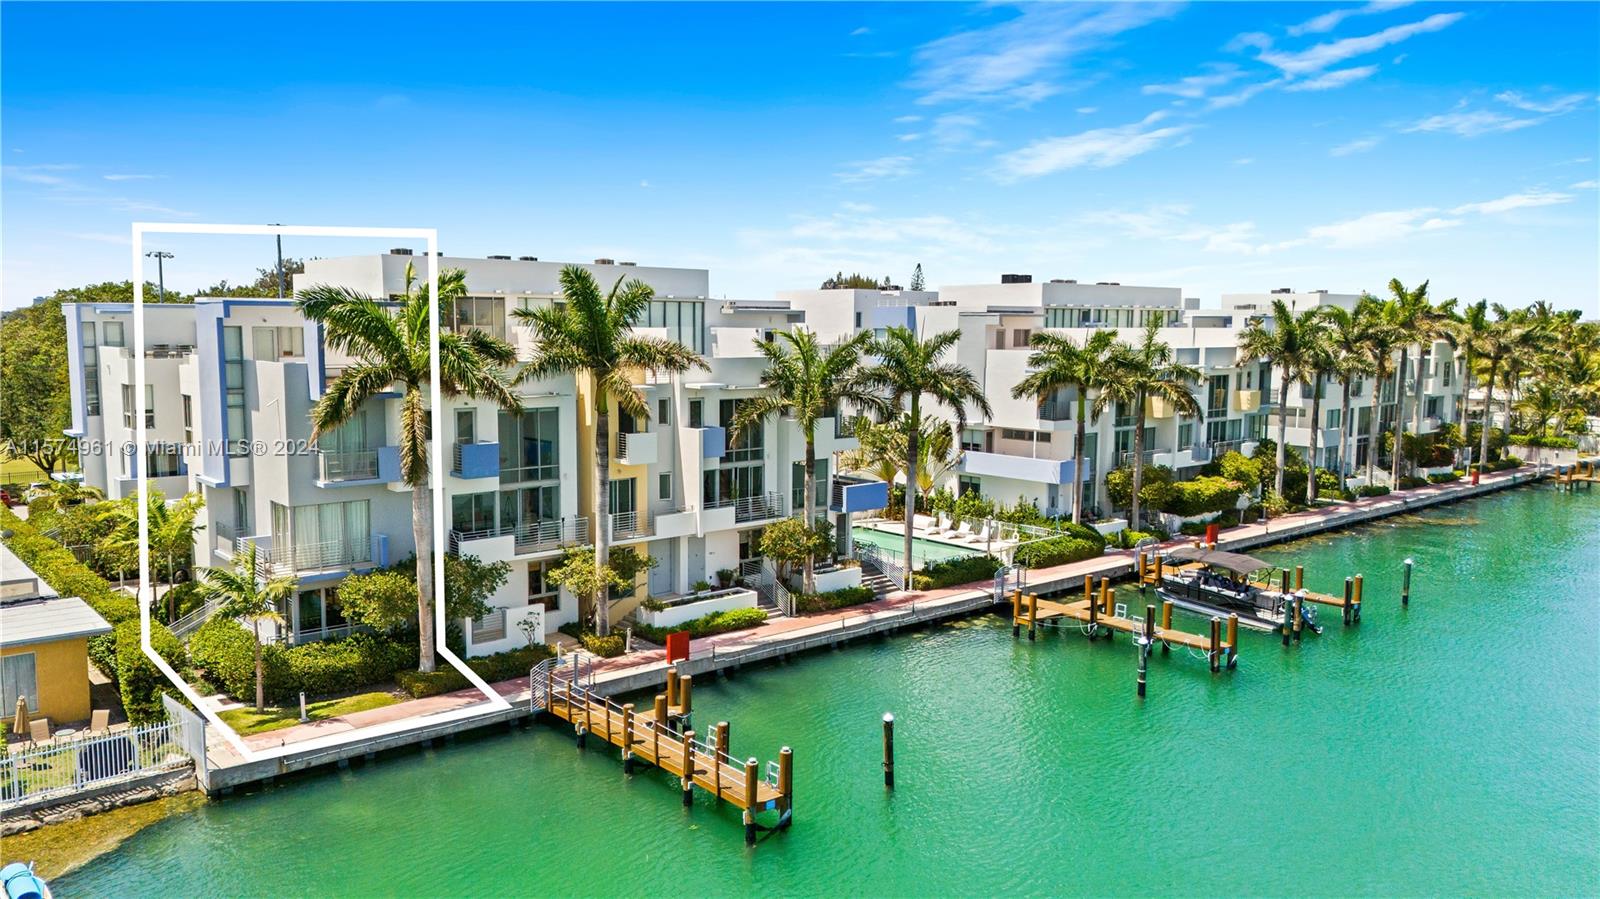 Property for Sale at 155 N Shore Dr 1, Miami Beach, Miami-Dade County, Florida - Bedrooms: 3 
Bathrooms: 4  - $1,650,000